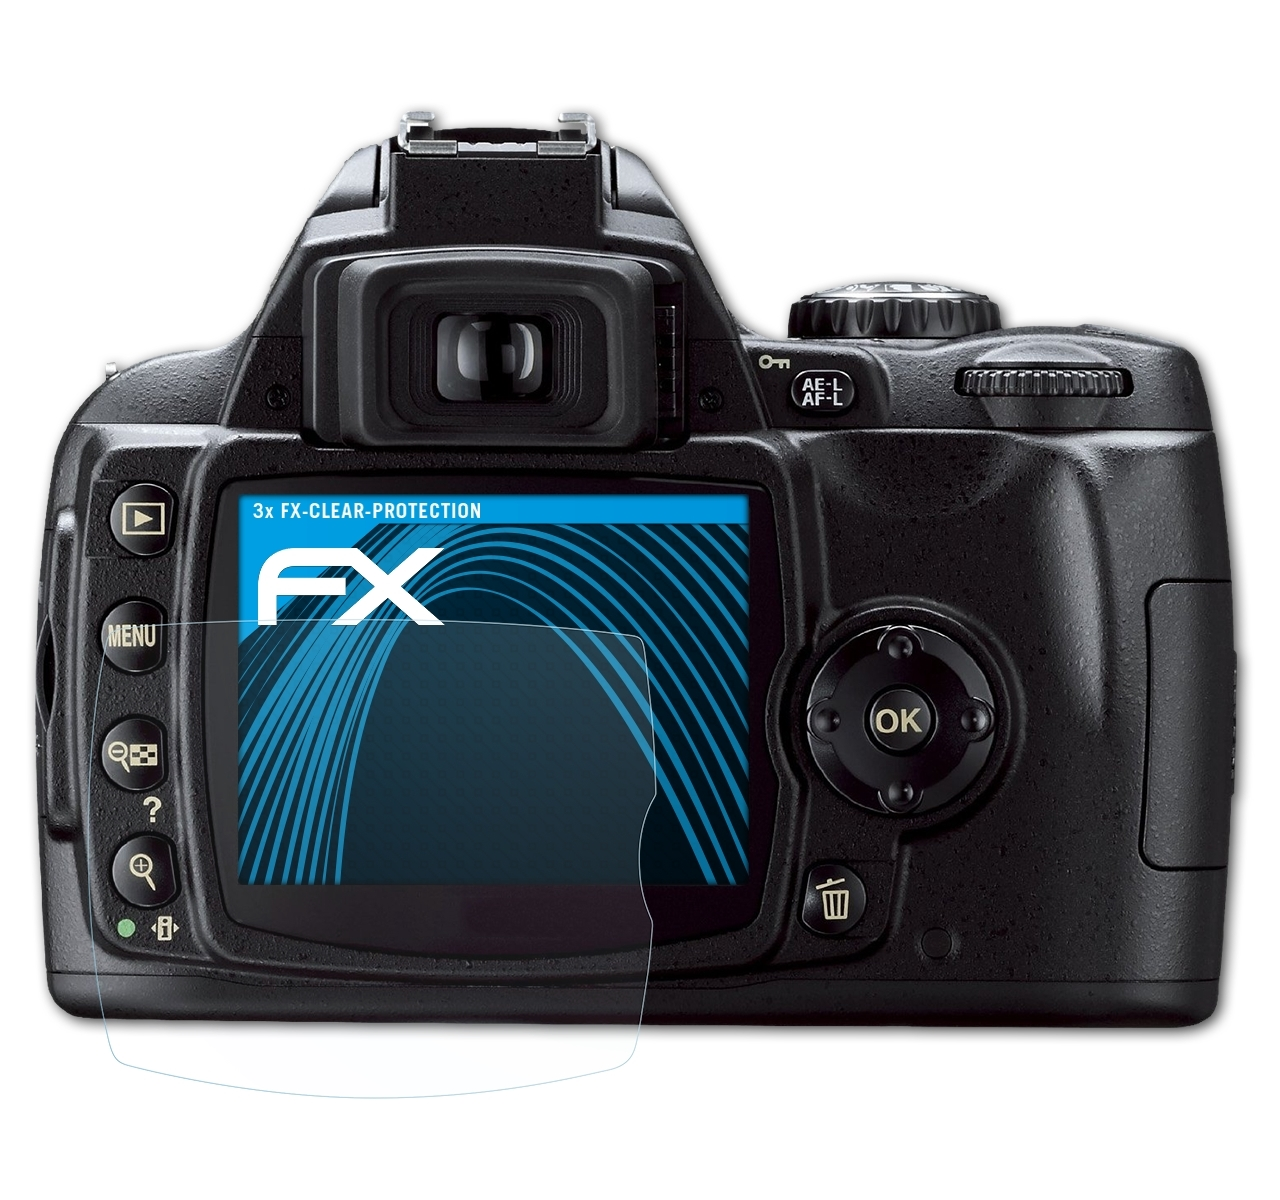 D40X) ATFOLIX 3x Displayschutz(für Nikon FX-Clear